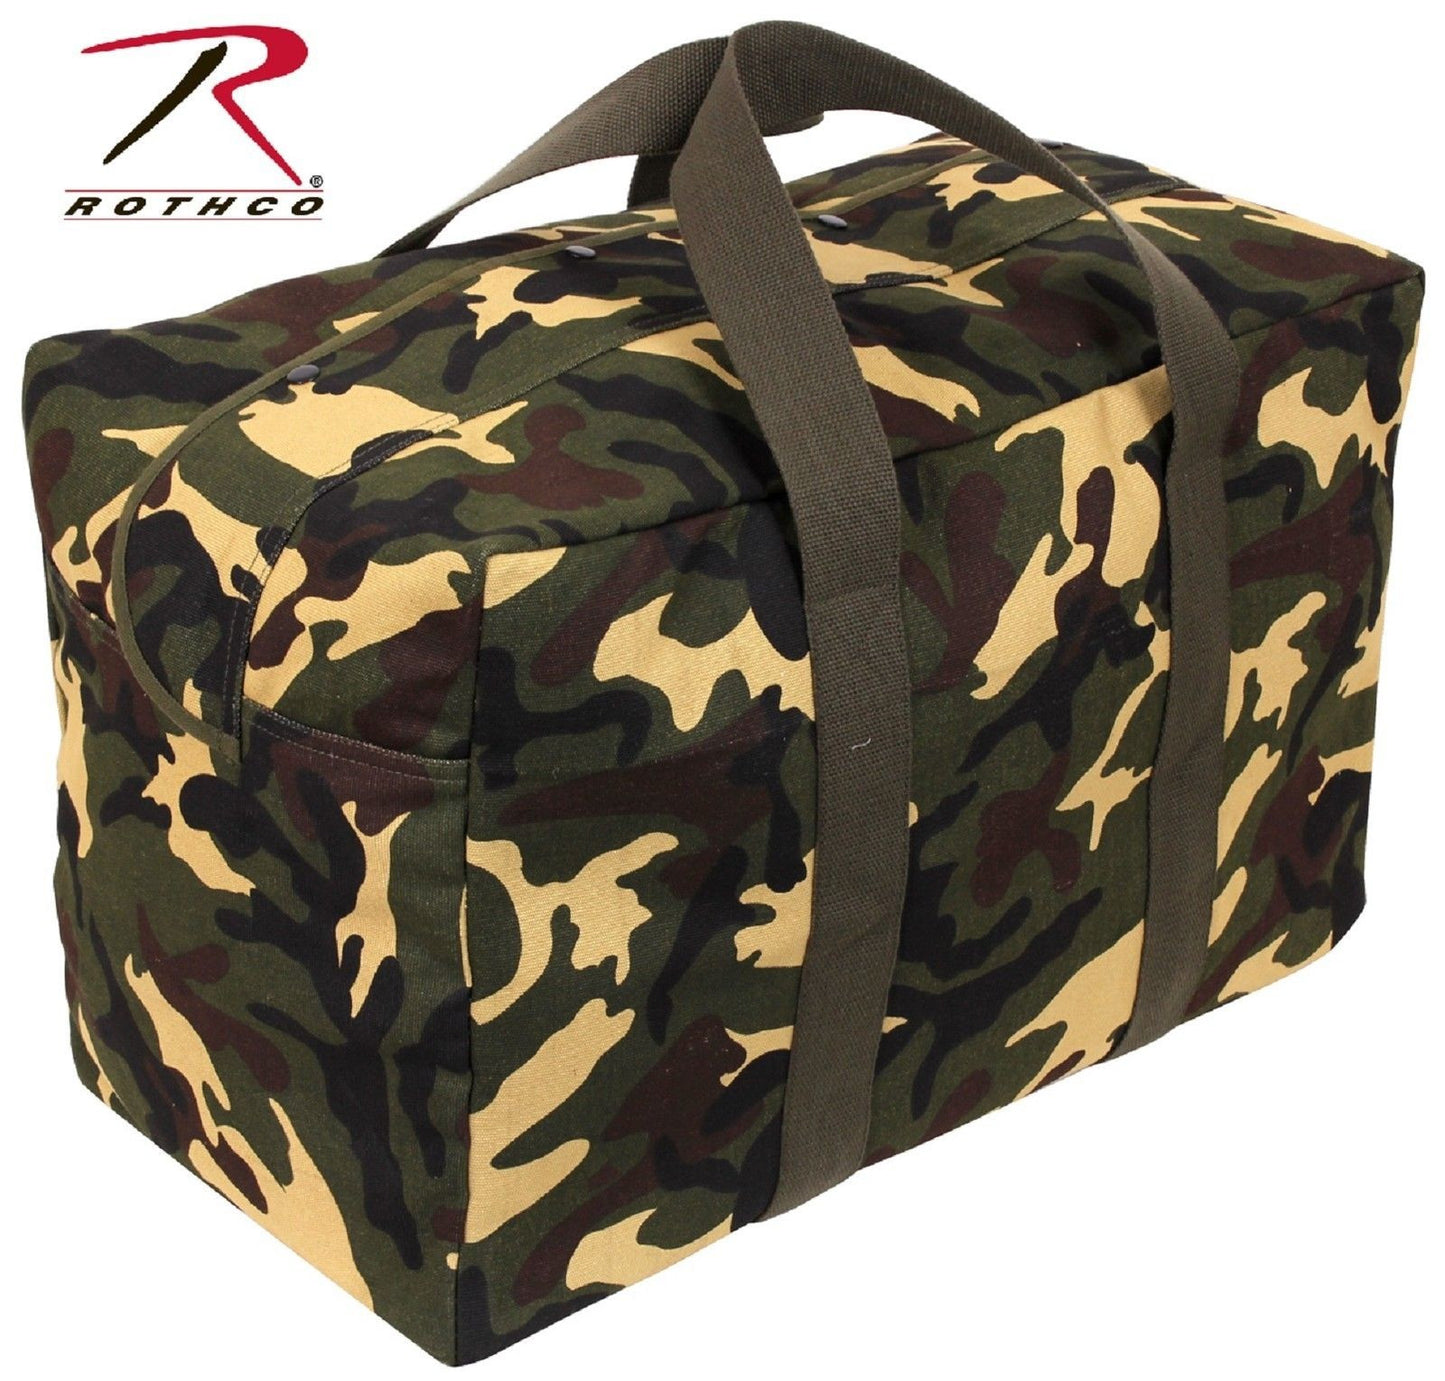 Woodland Camouflage Parachute Cotton Canvas Cargo Duffle Bag - Rothco 5123